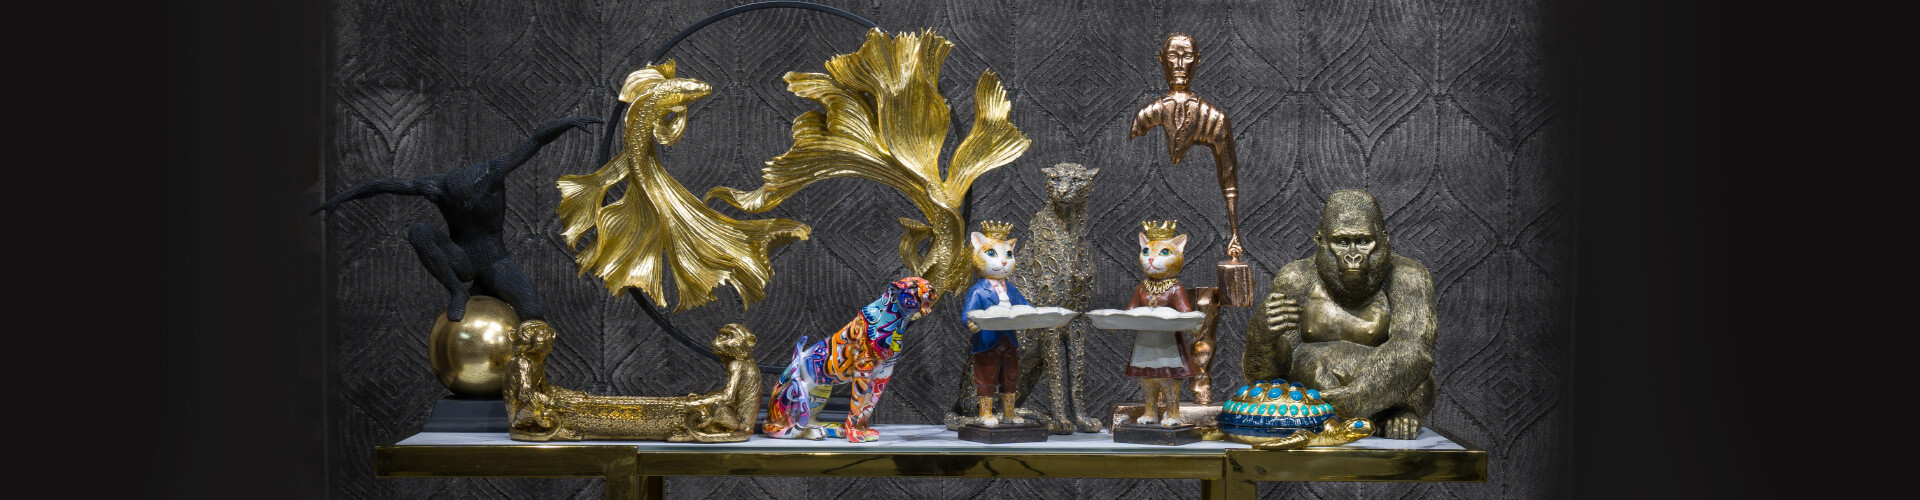 Decorative figures - ALANDEKO.com